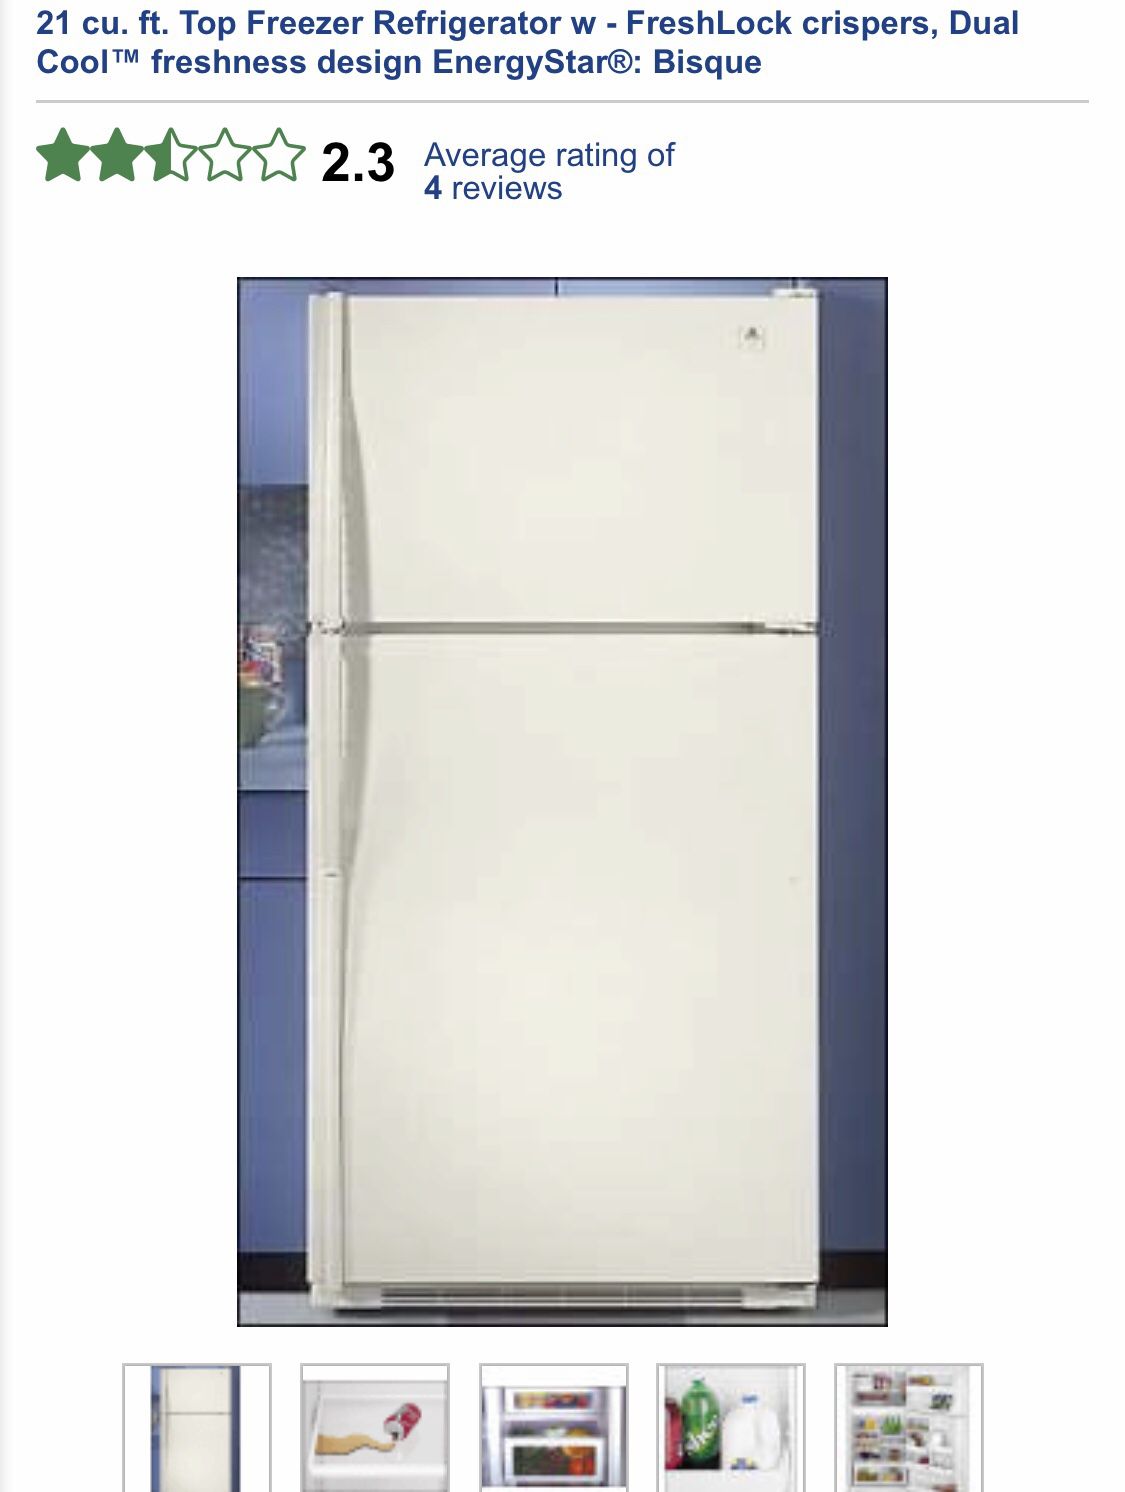 Maytag Top Freezer Refrigerador with ice maker